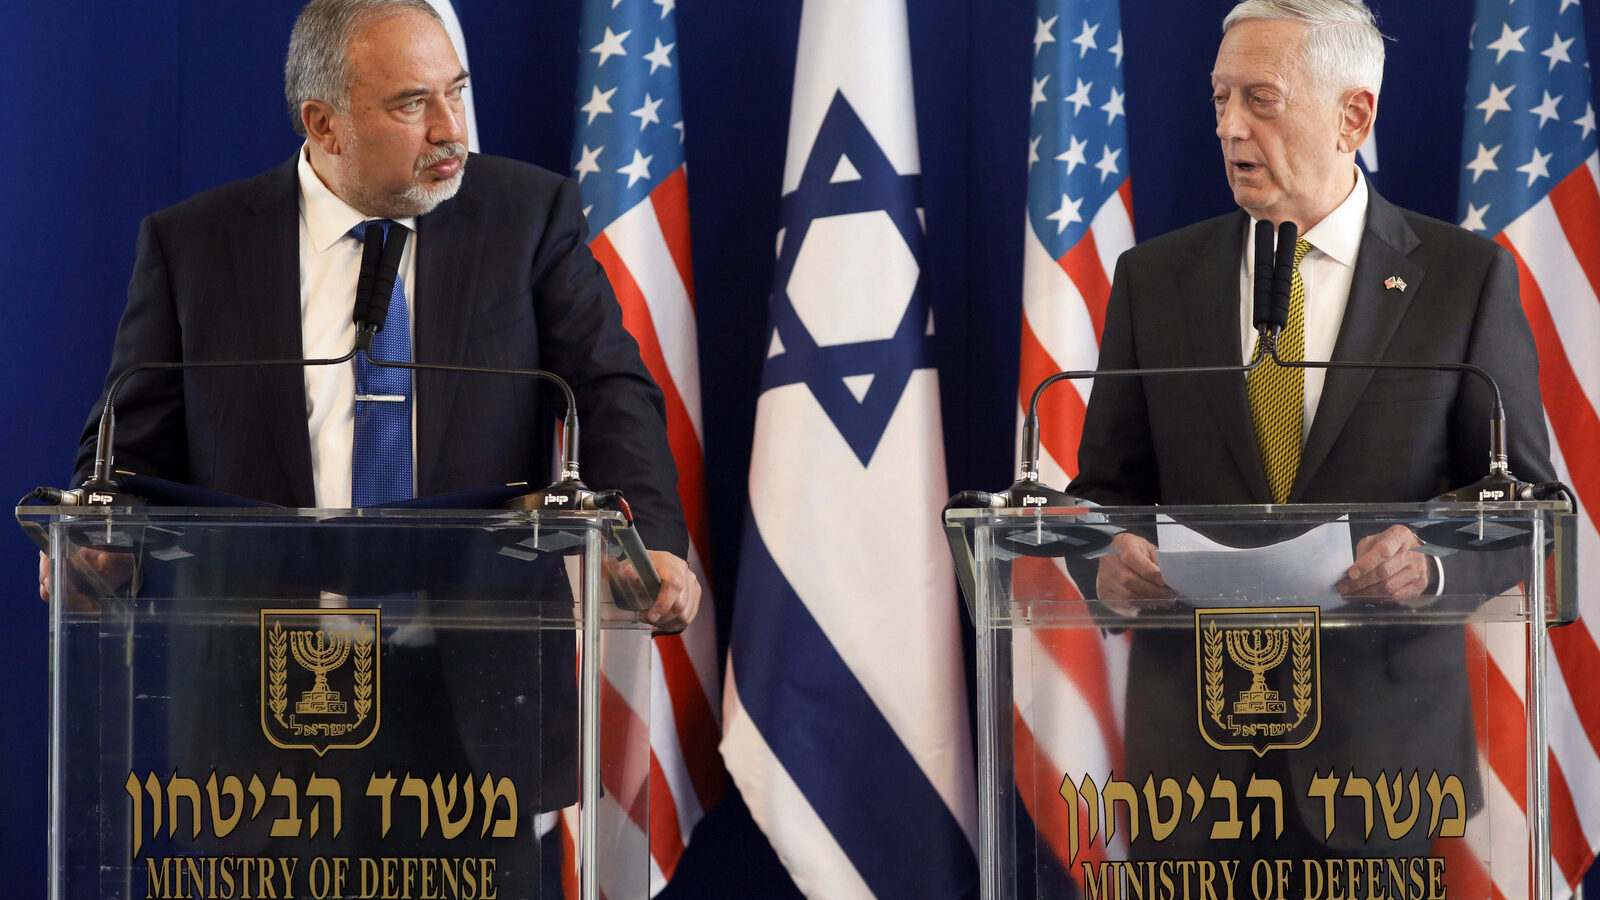 U.S. Defense Secretary Jim Mattis, right, and Israeli Defense Minister Avigdor Lieberman attend a joint press conference at the Defense Ministry in Tel Aviv, Israel, April 21, 2017. (Jonathan Ernst/AP)